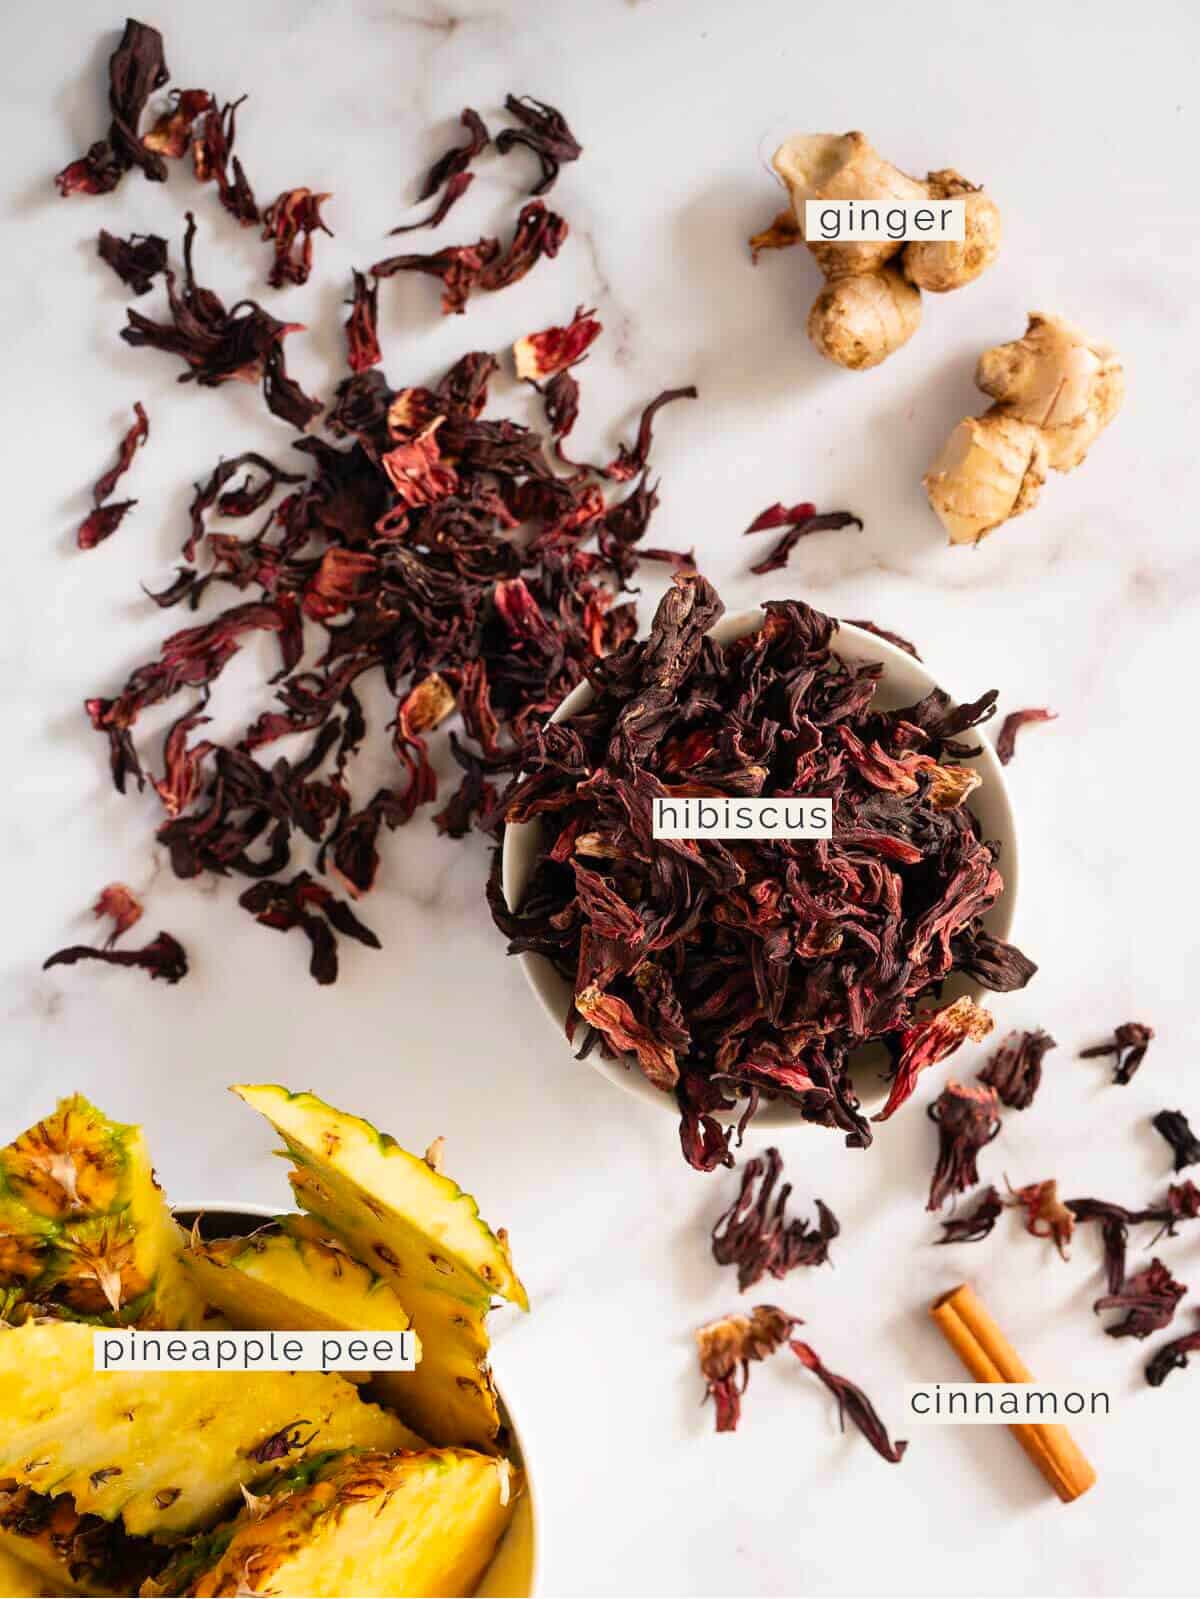 labeled ingredients to make hibiscus tea.